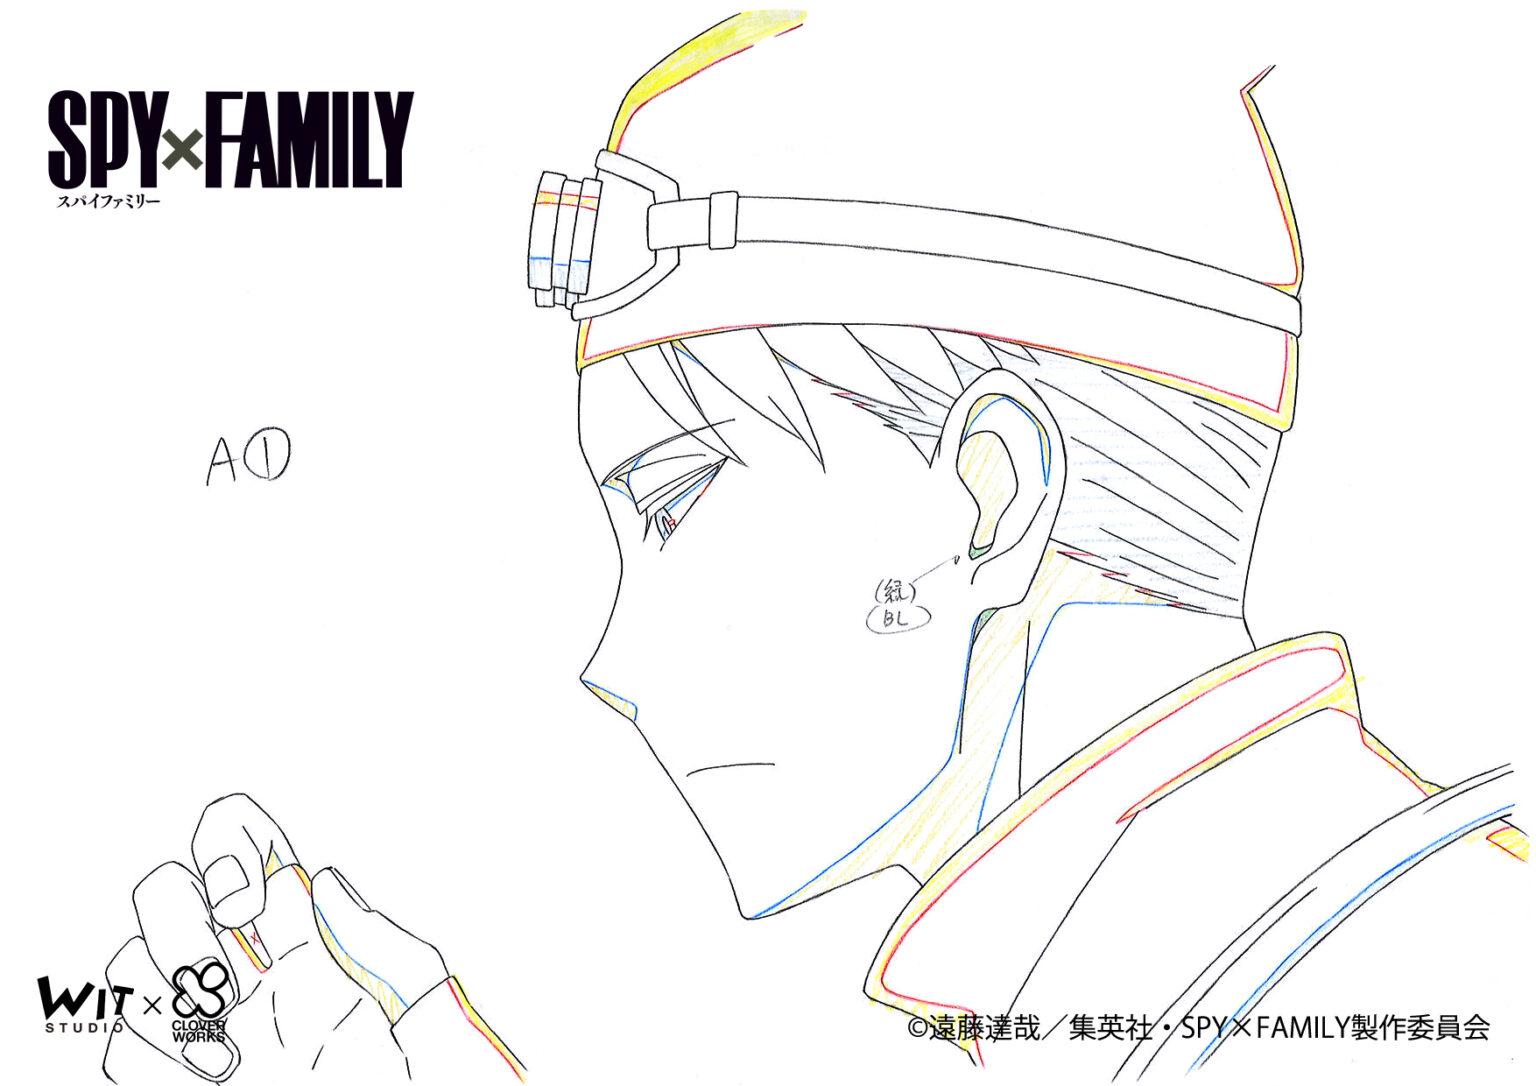 El anime SPY x FAMILY celebra la emisión de su episodio #2